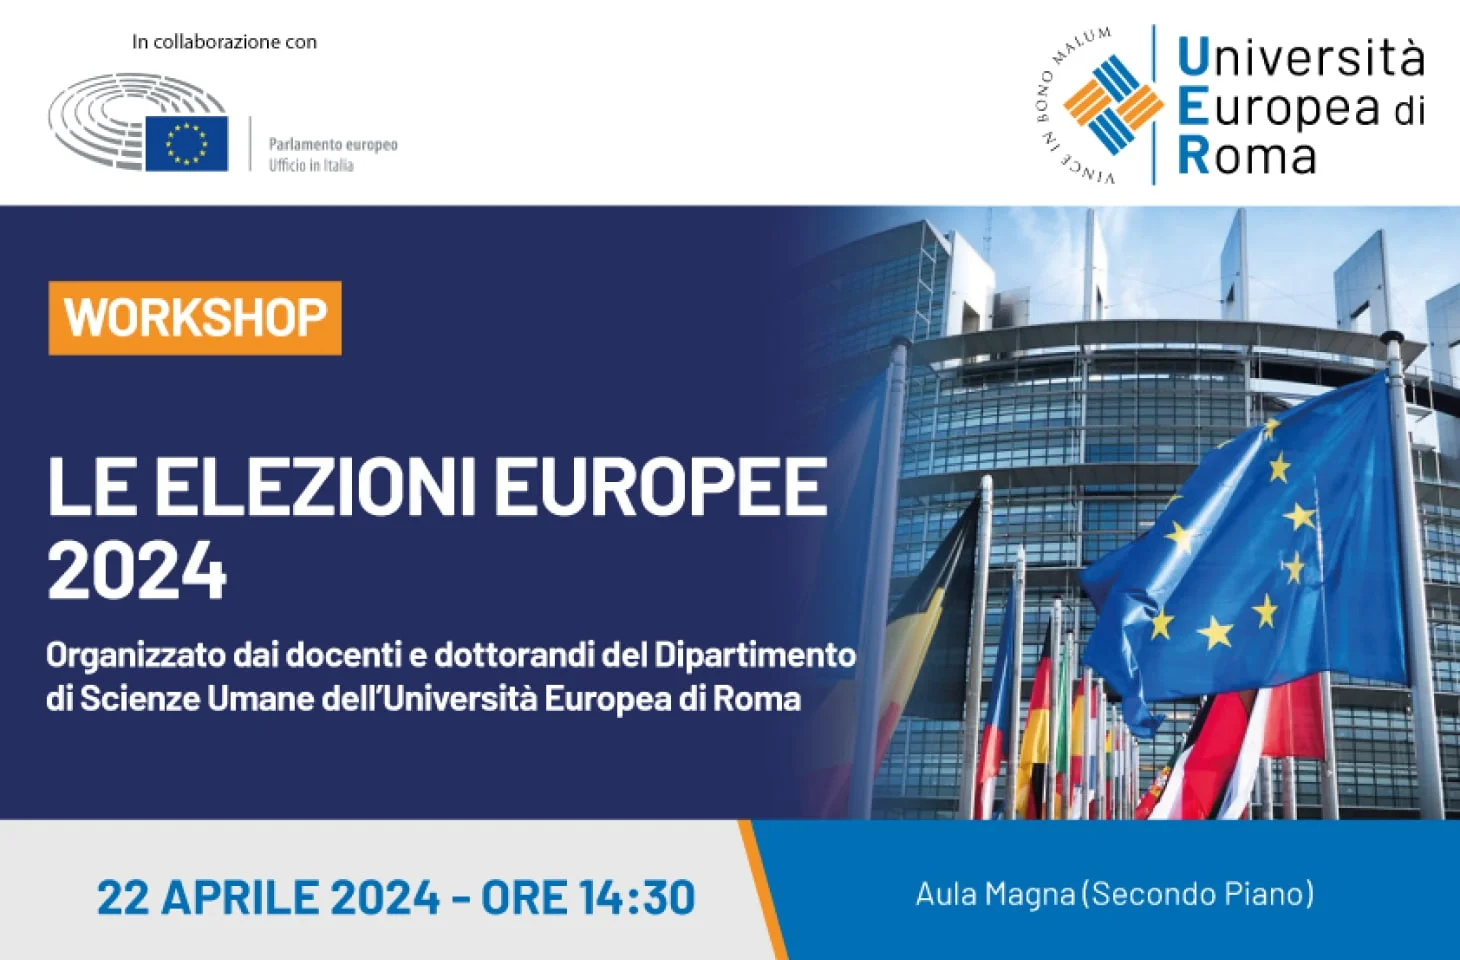 Workshop “Le elezioni europee 2024”